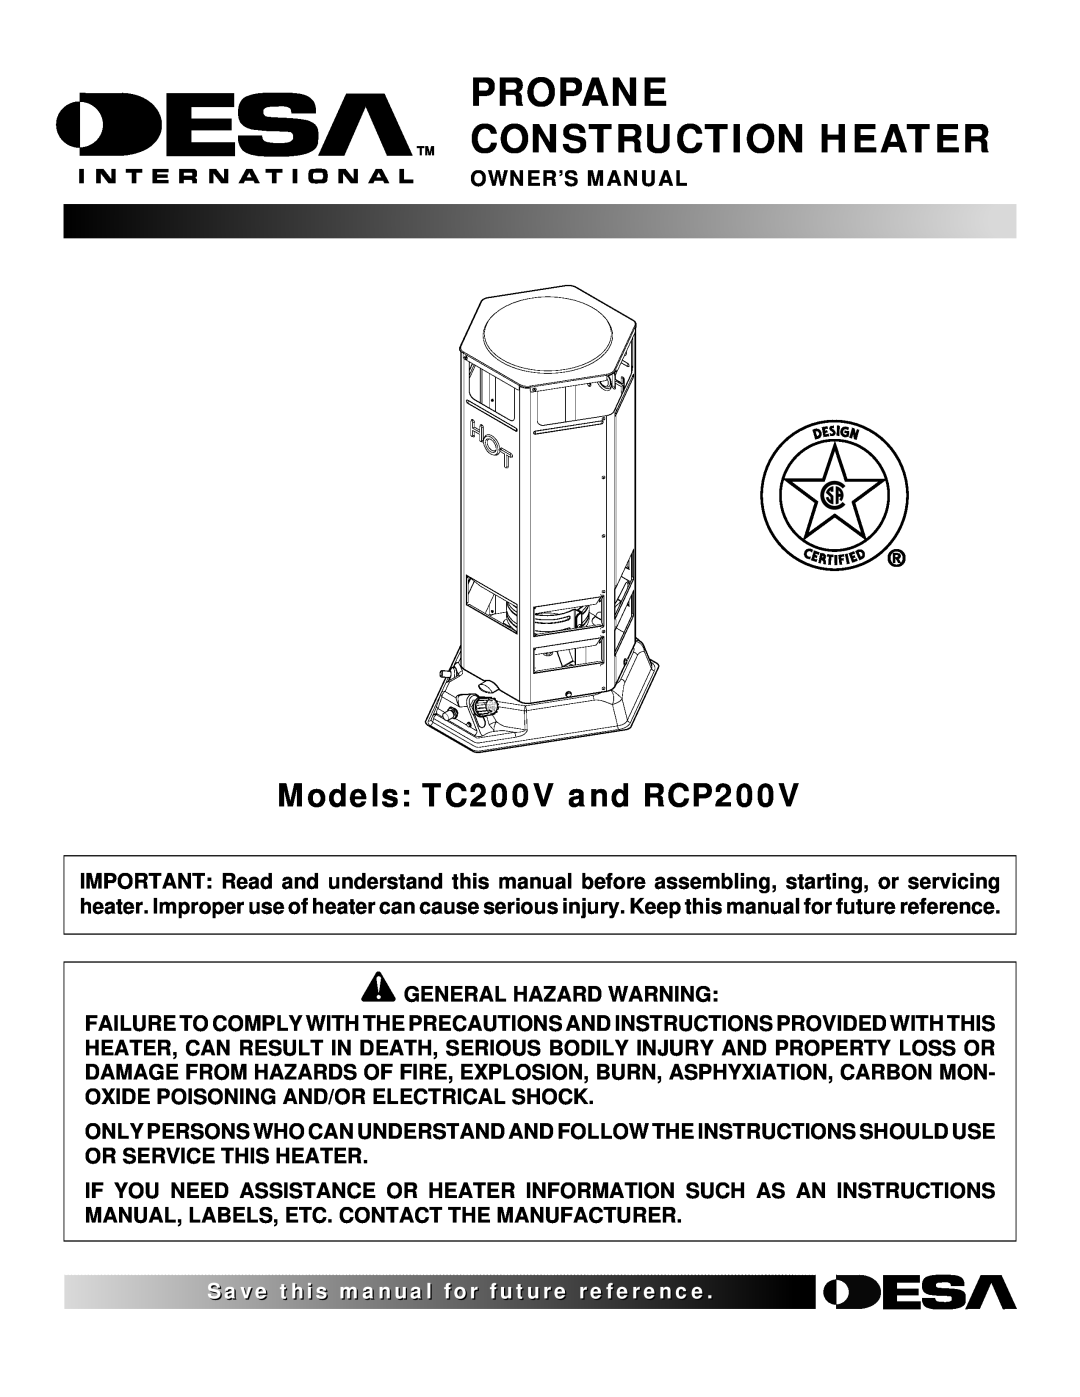 Desa owner manual Models TC200V and RCP200V, Propane Tm Construction Heater 